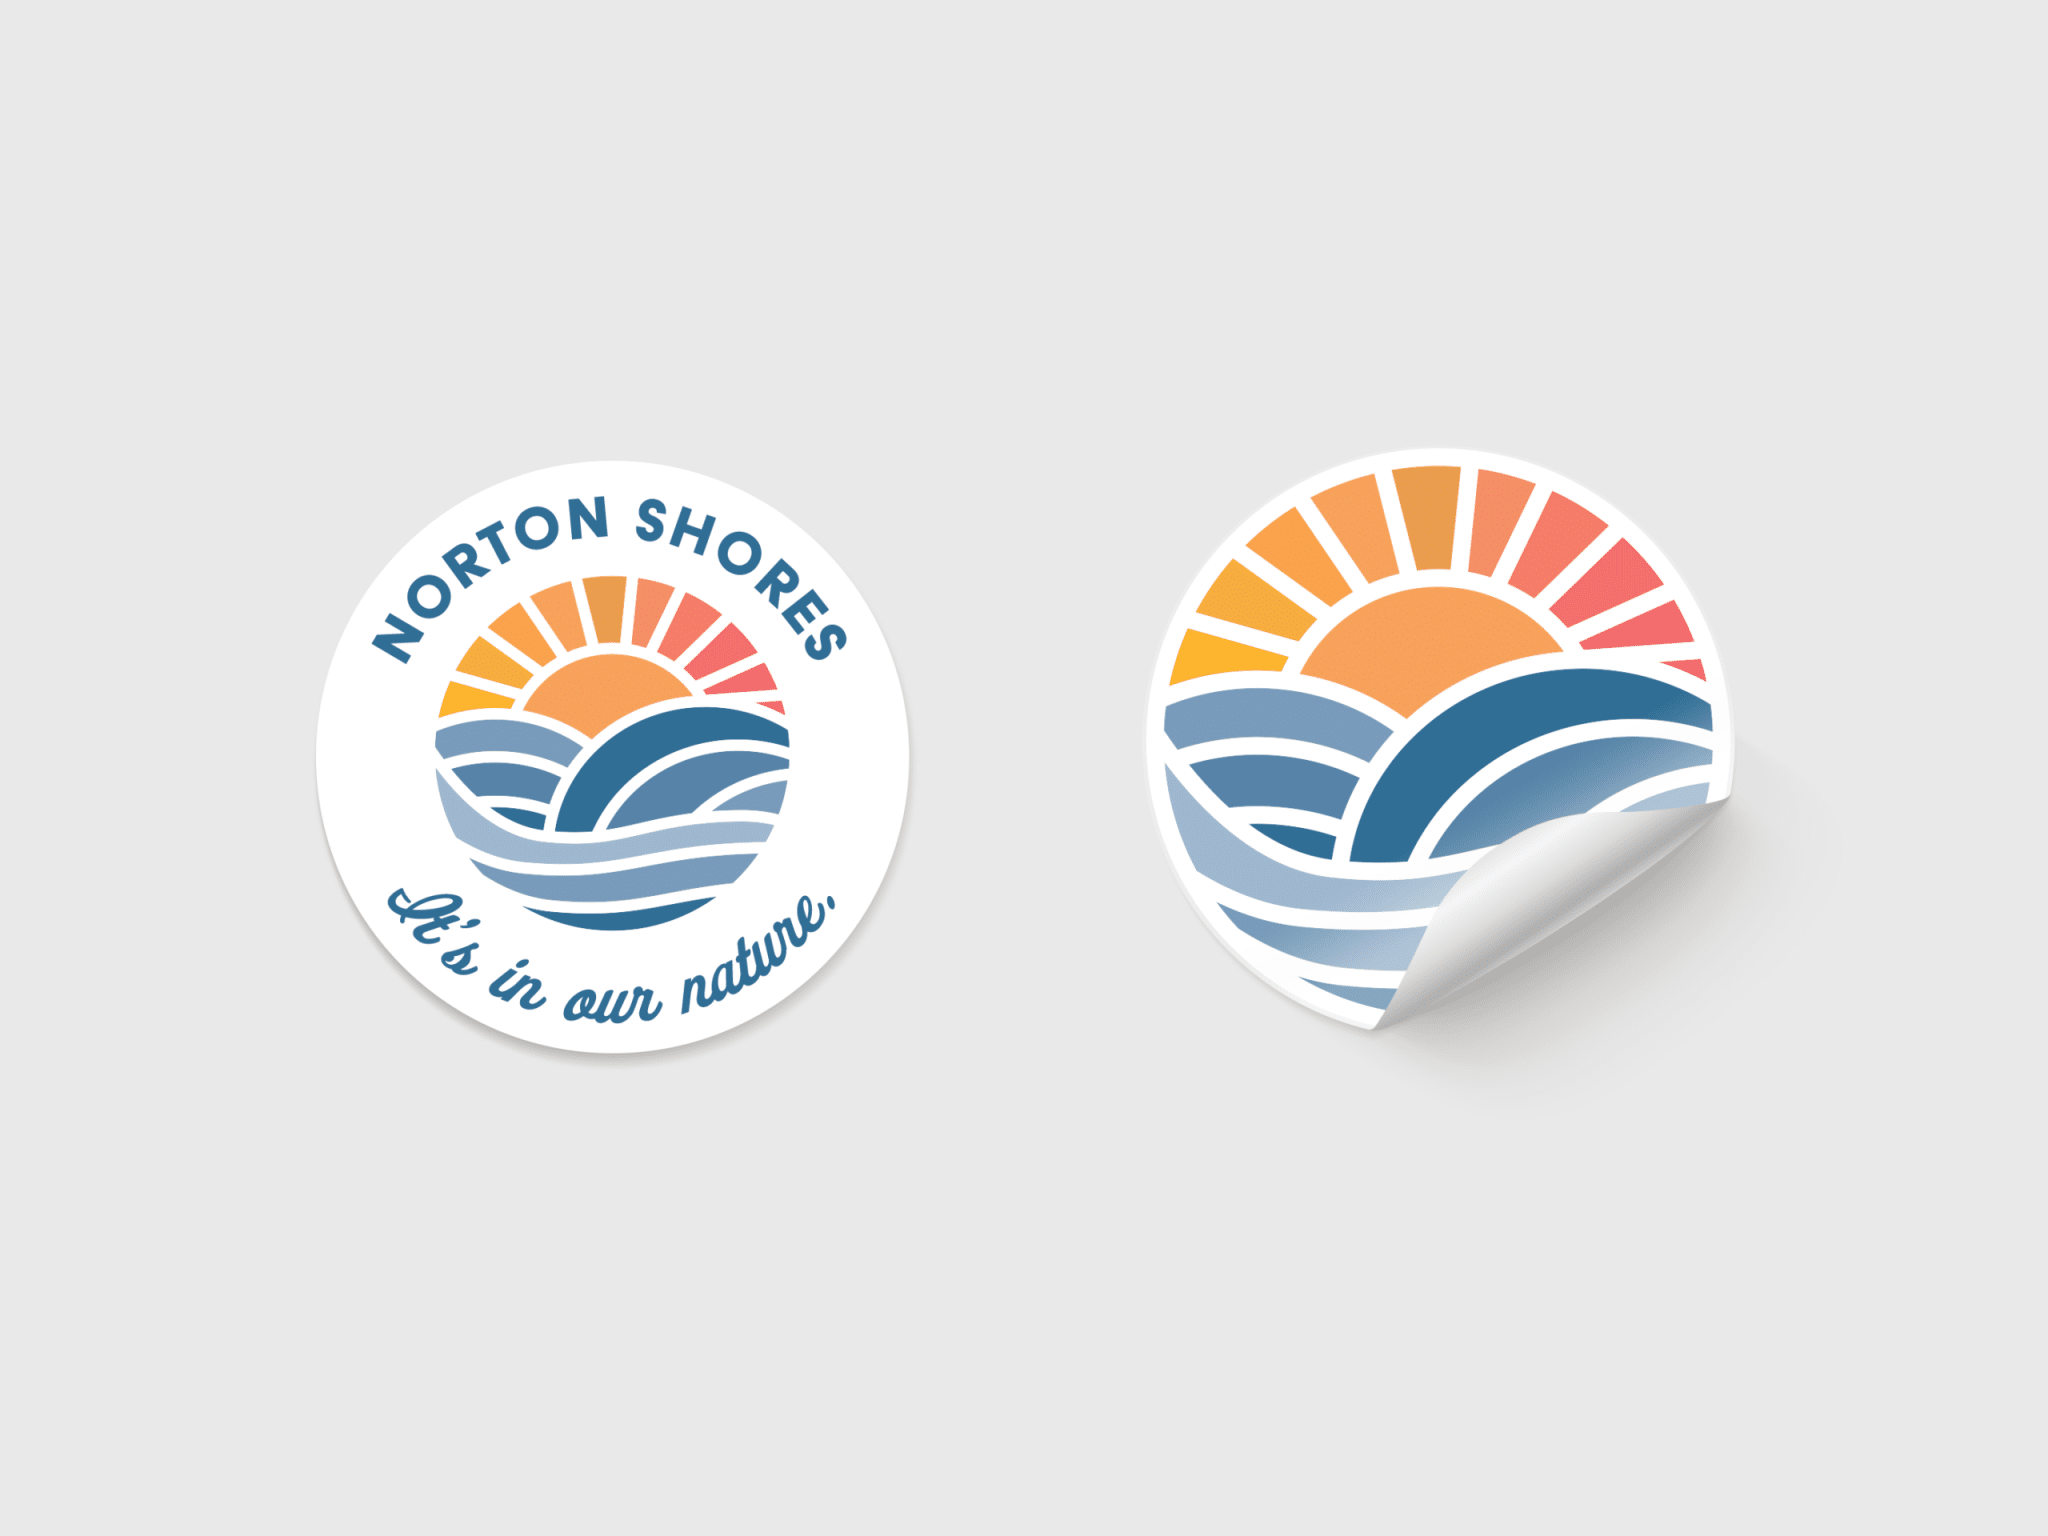 City of Norton Shores Stickers